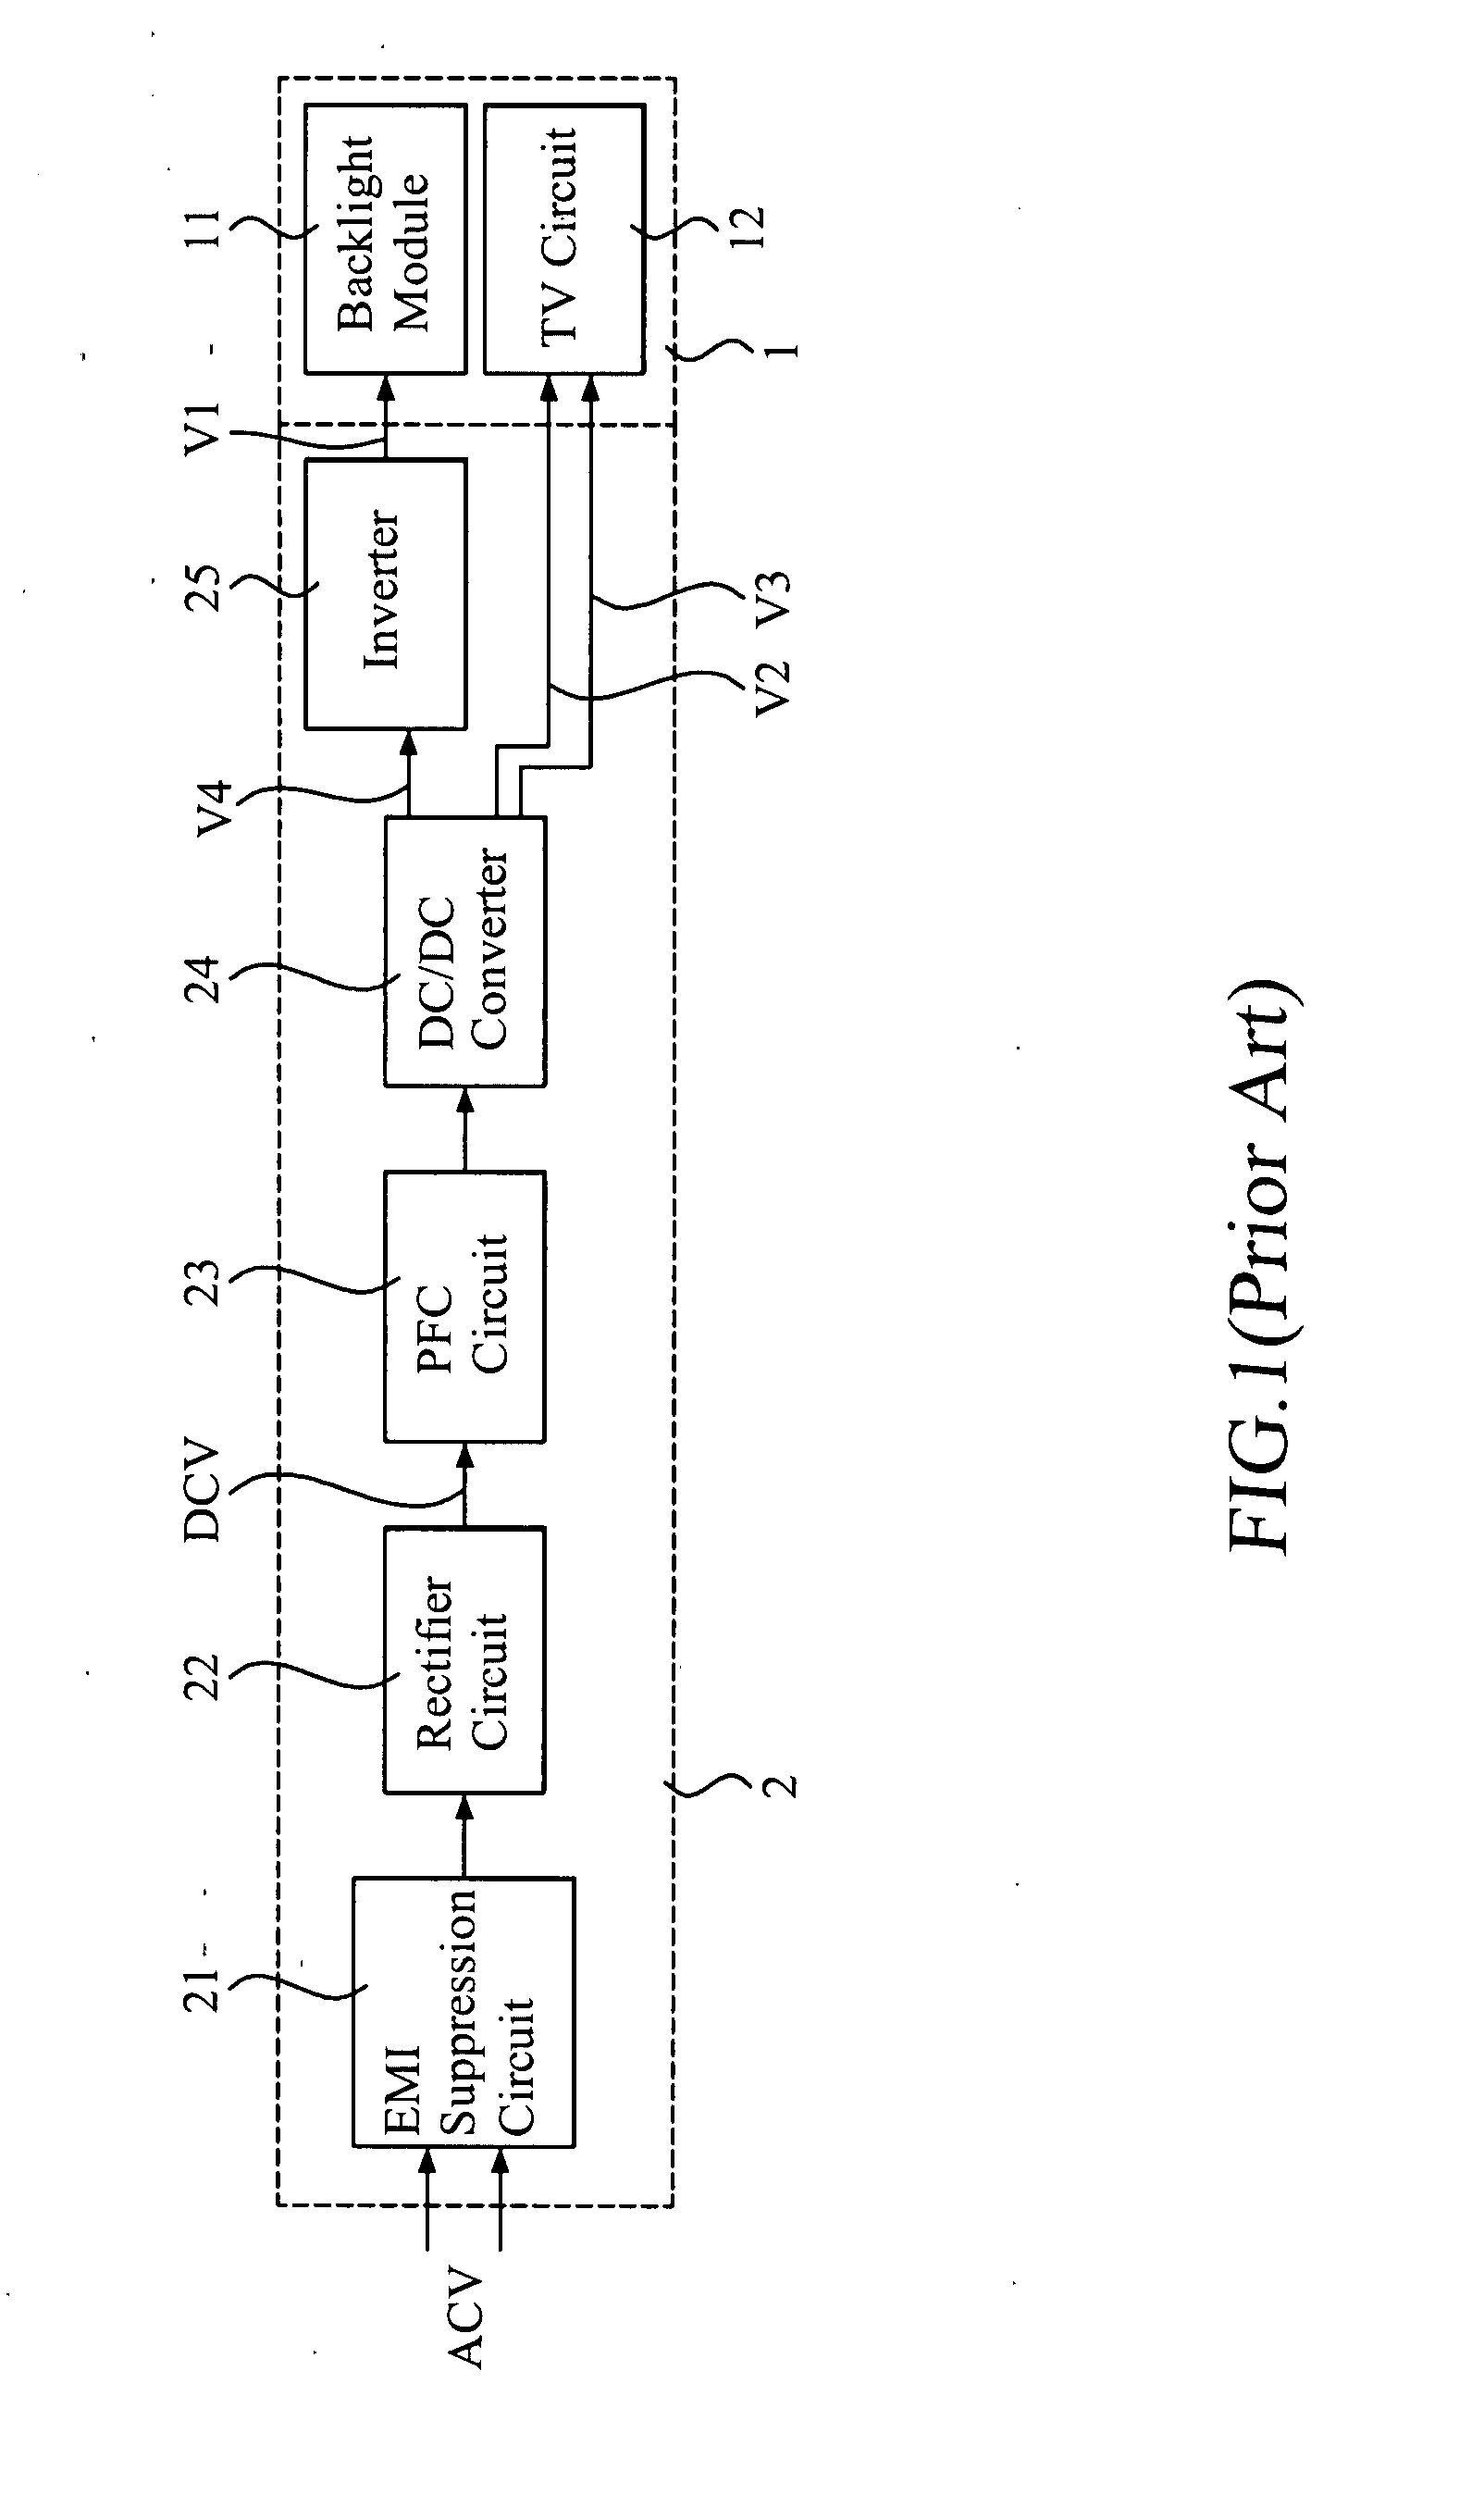 Split power supply circuit for LCD TV